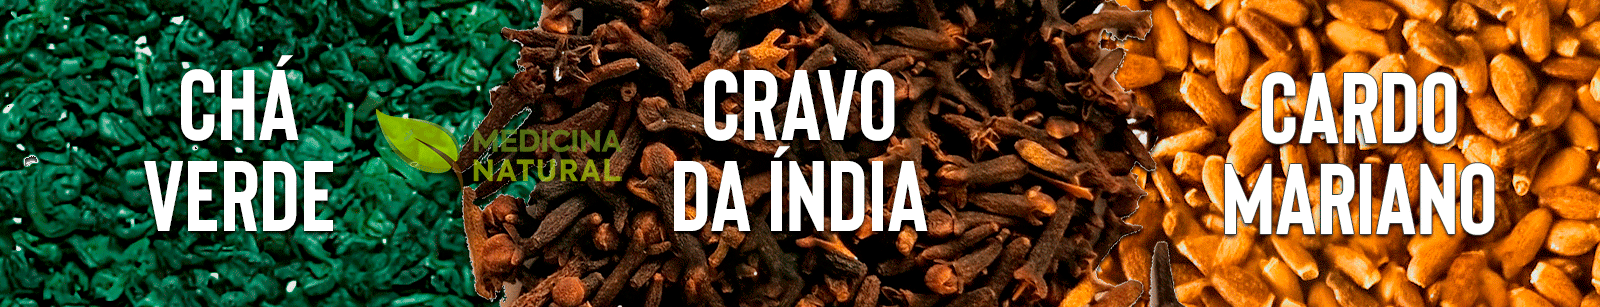 chás antioxidantes: chá-verde cravo-da-índia e cardo mariano